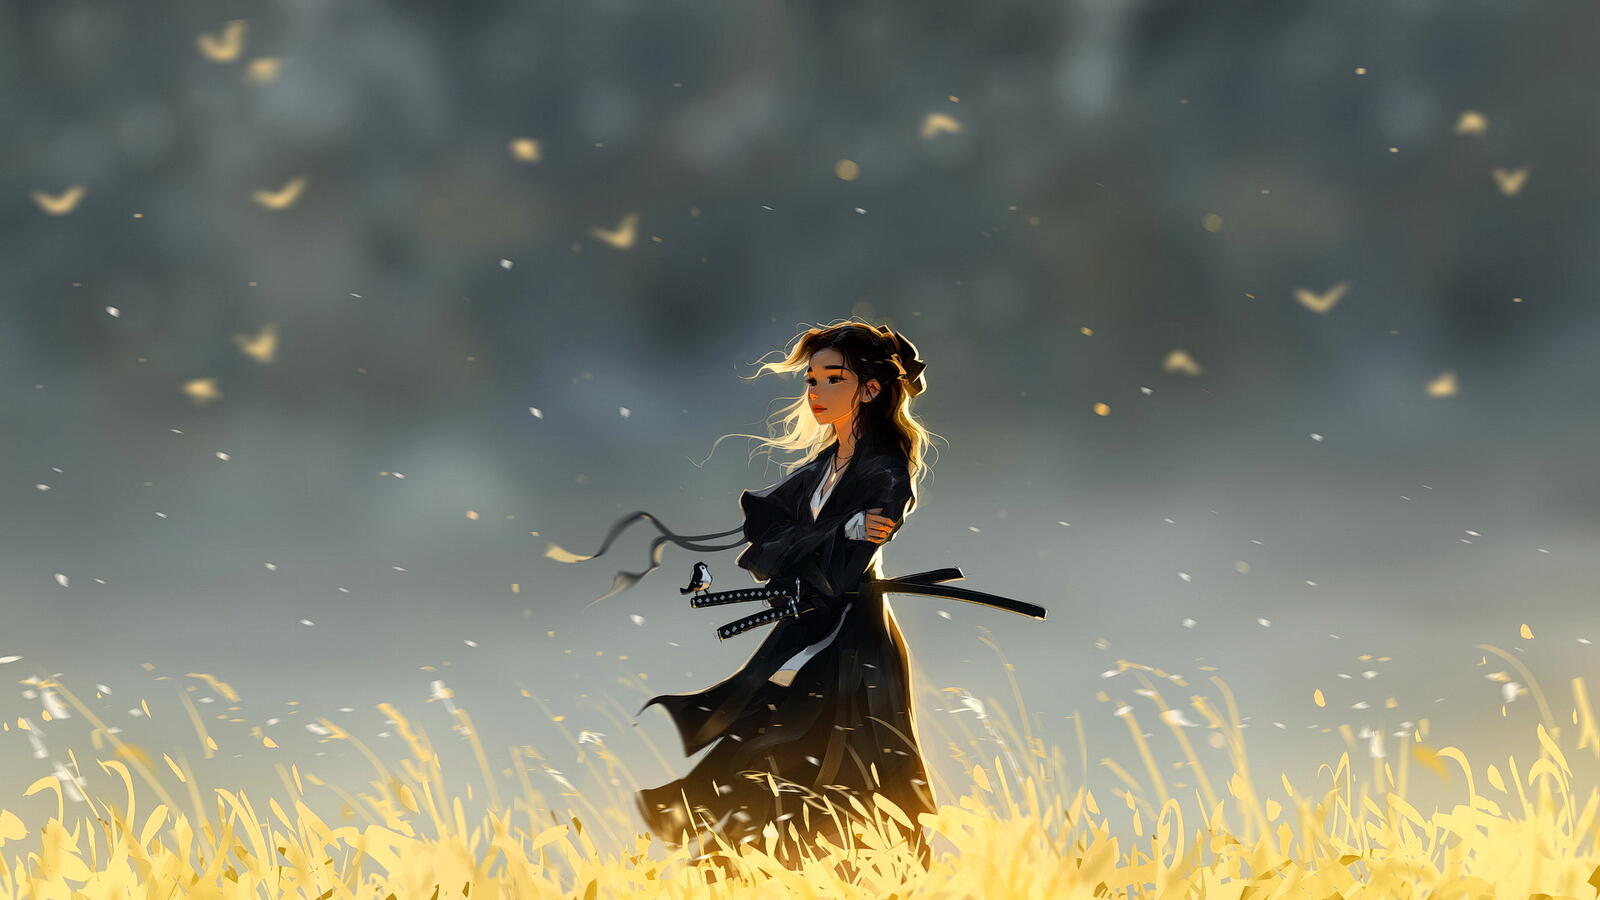 Free photo Samurai girl standing in a field